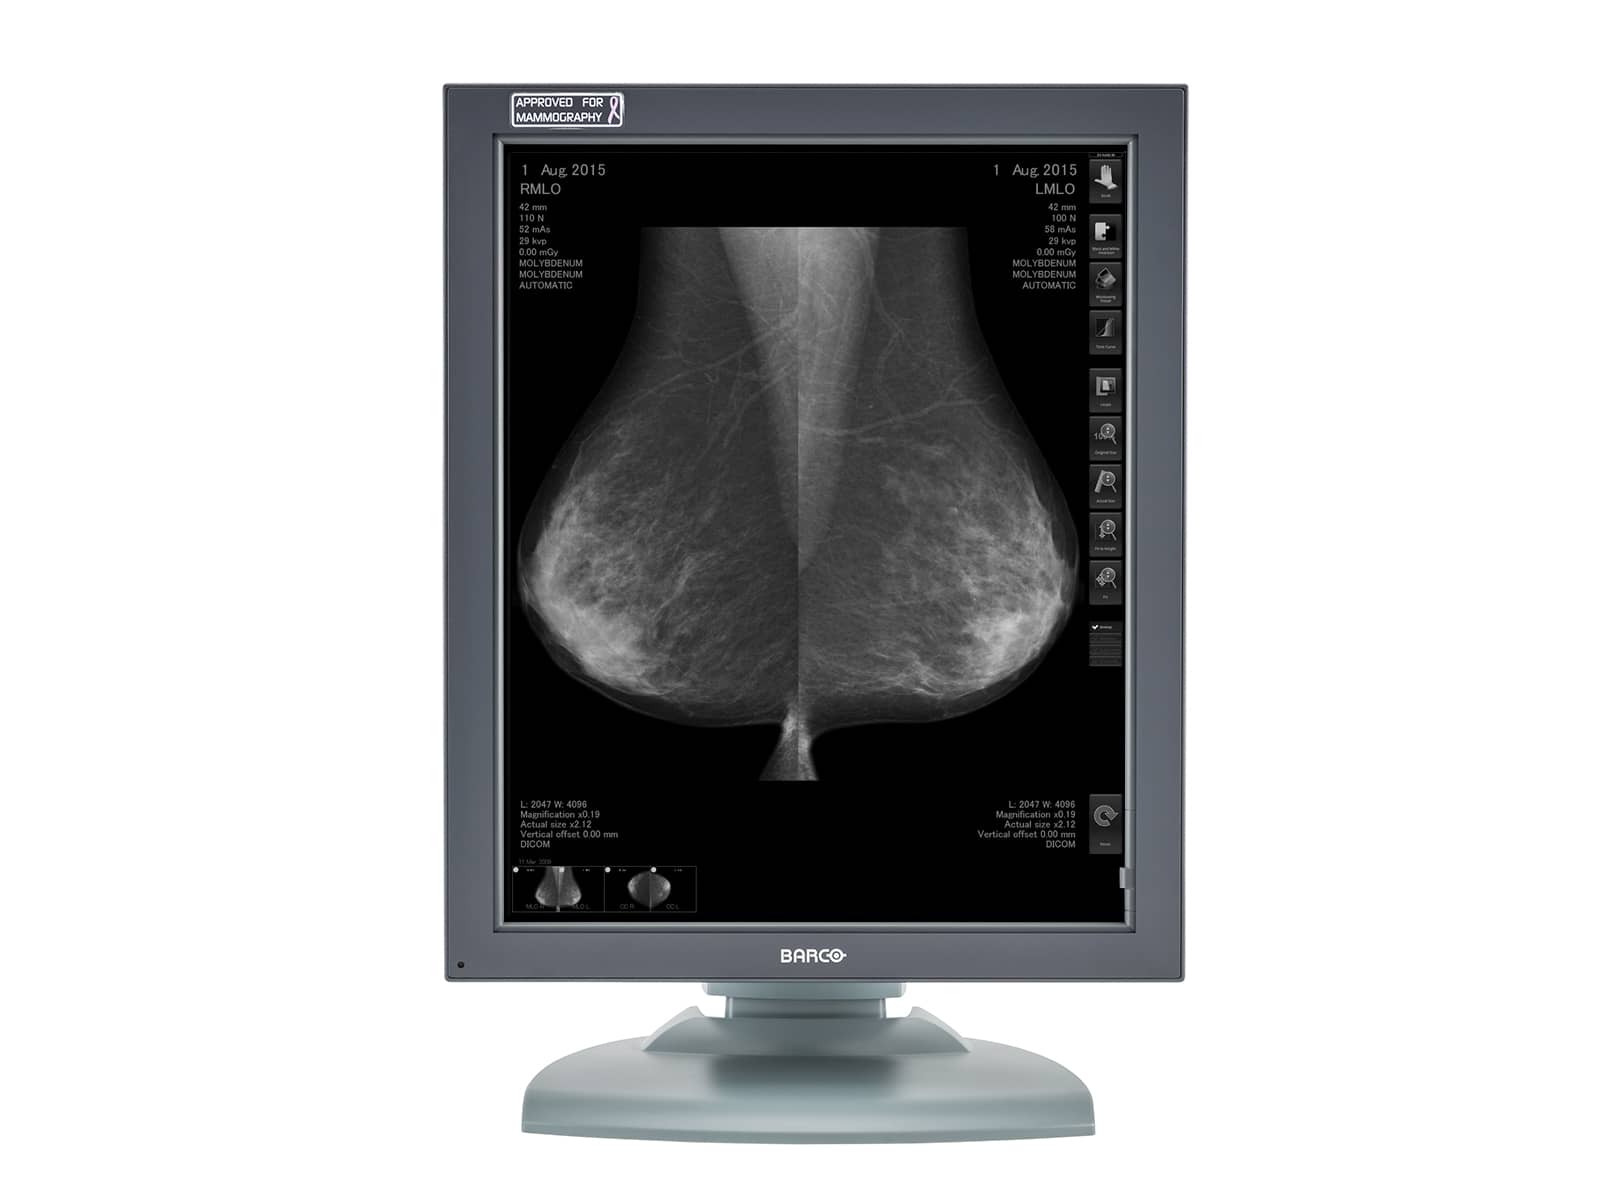 Barco Coronis MDMG-5121 Graustufen-Brustbildgebungs-PACS-Mammographie-Display (K9601259) Monitors.com